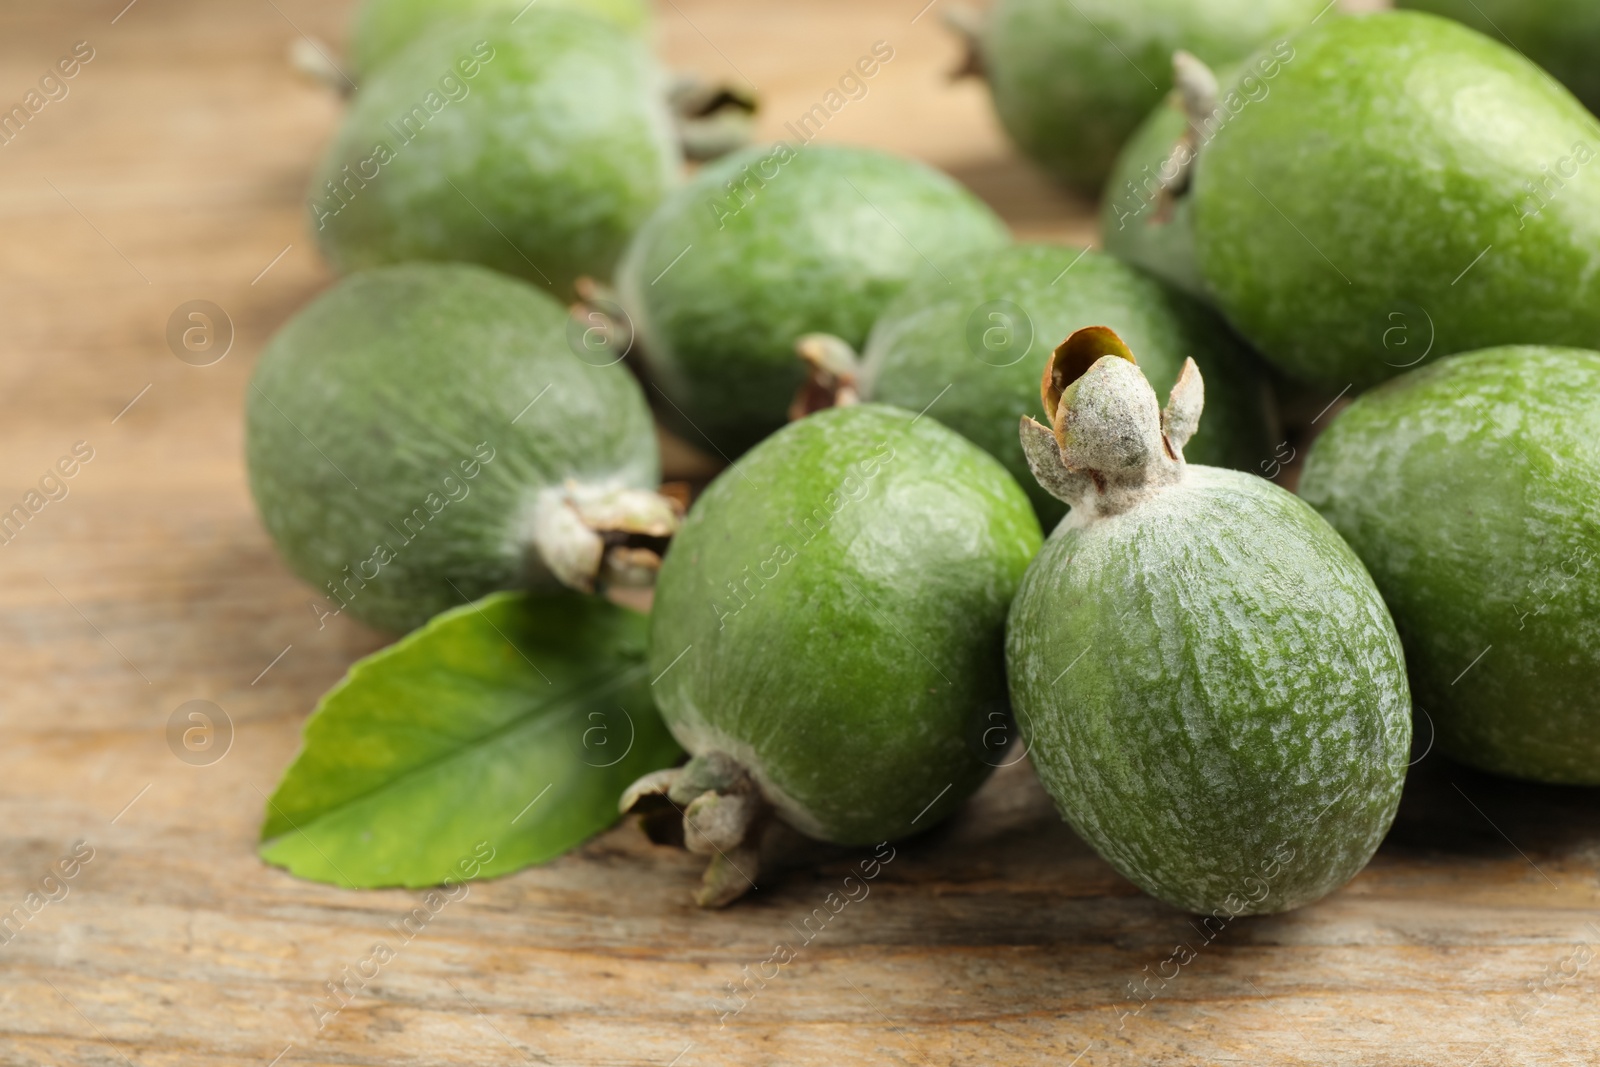 Photo of Fresh green feijoa fruits on wooden table, closeup